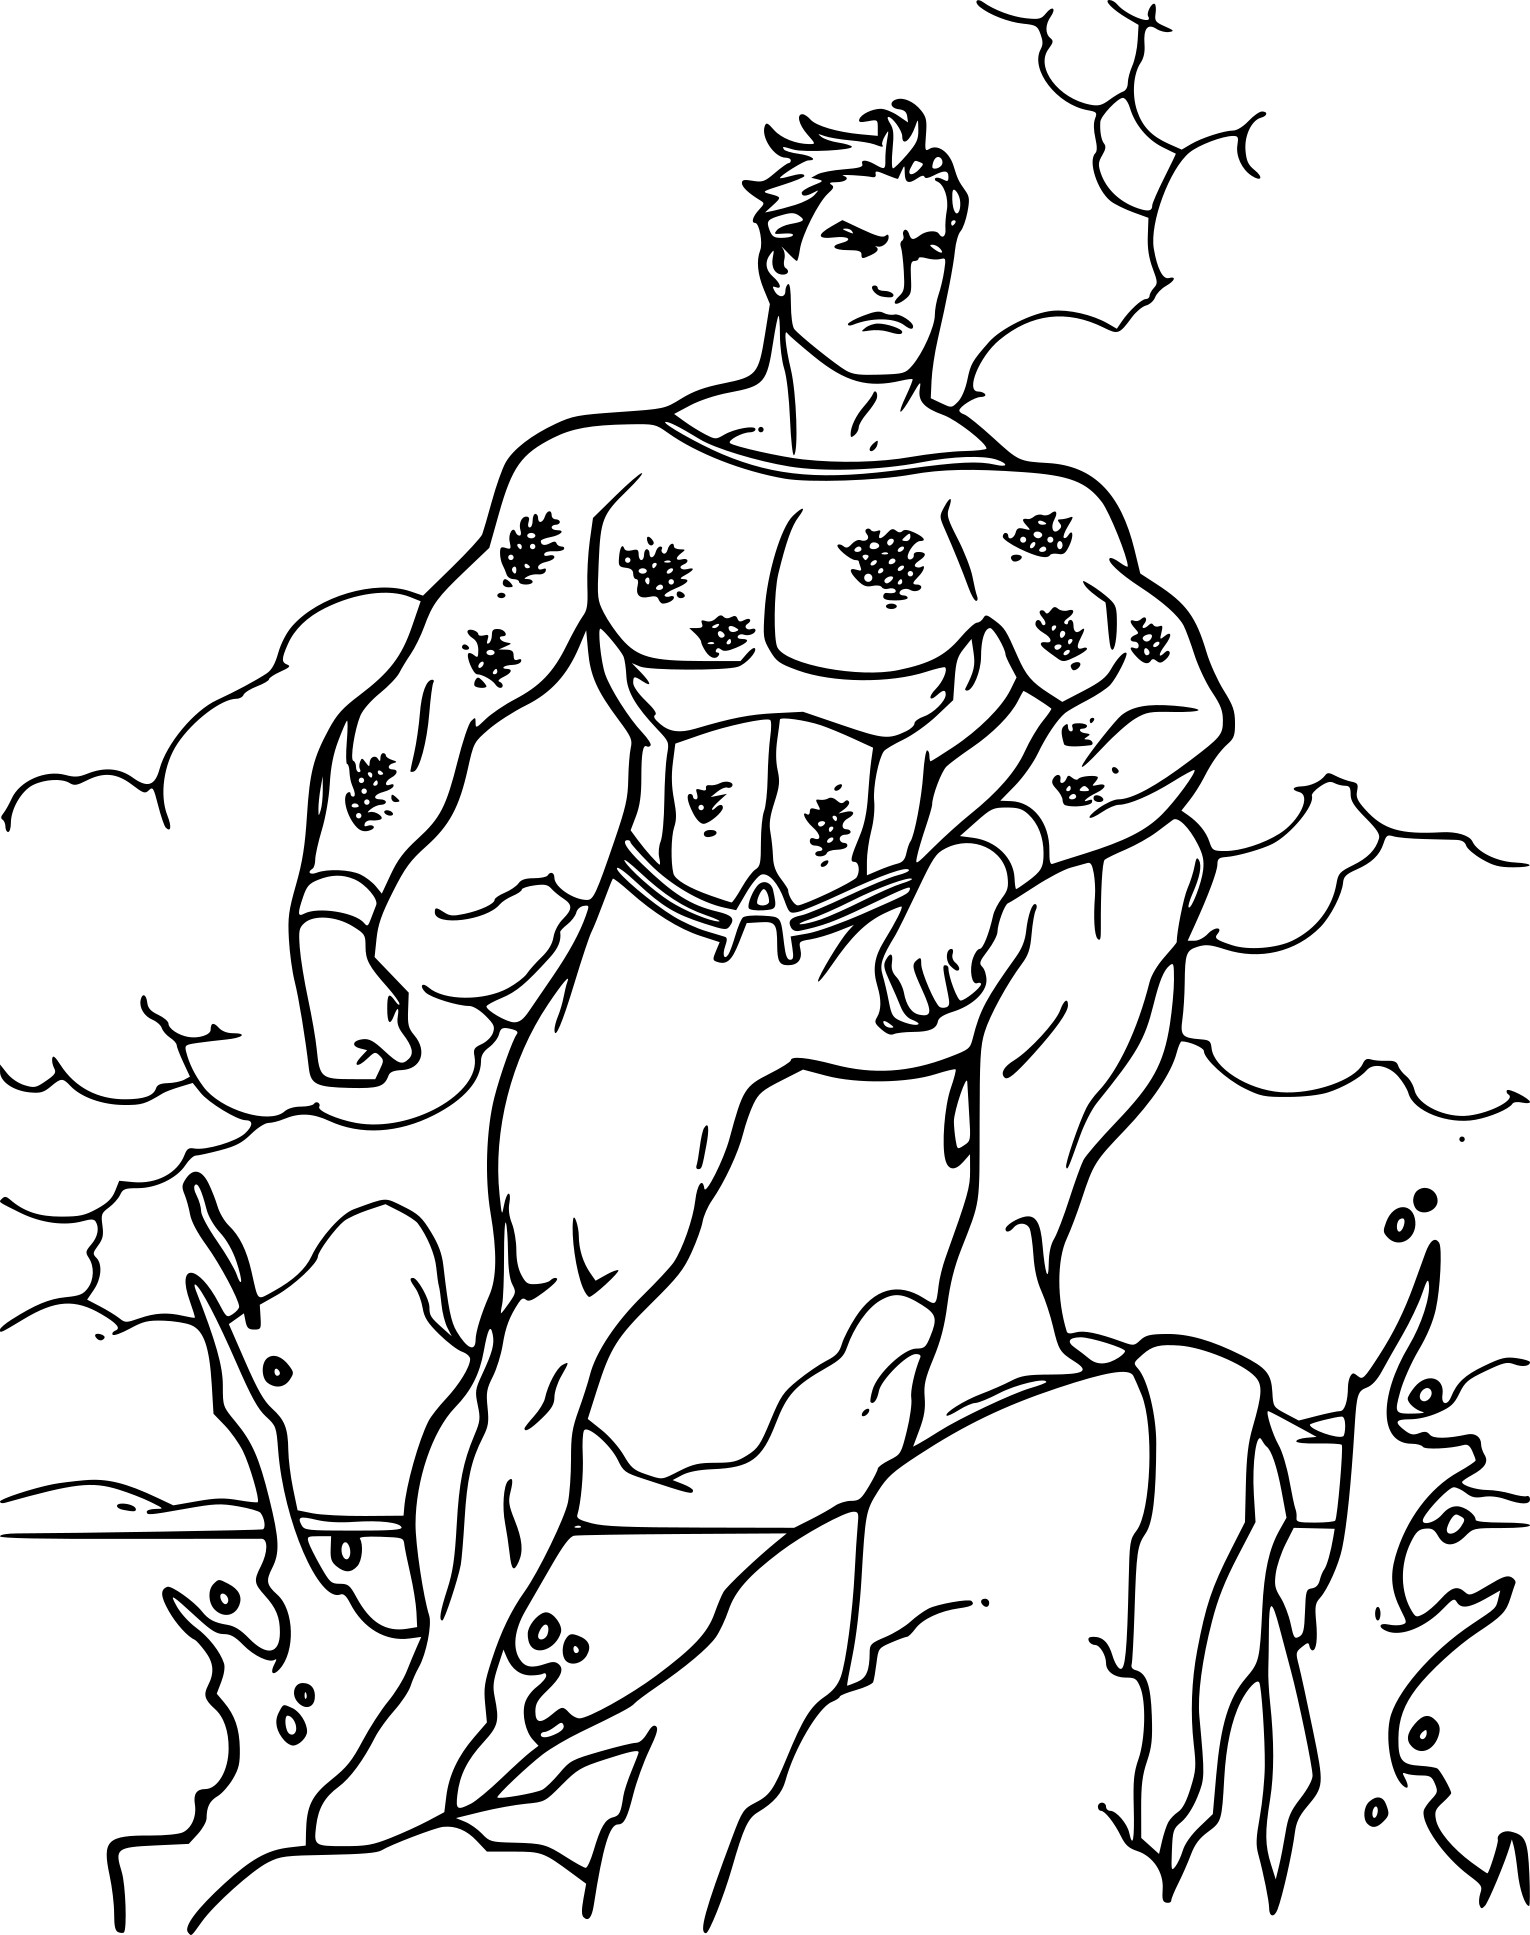 Disegno di Aquaman gratis da colorare